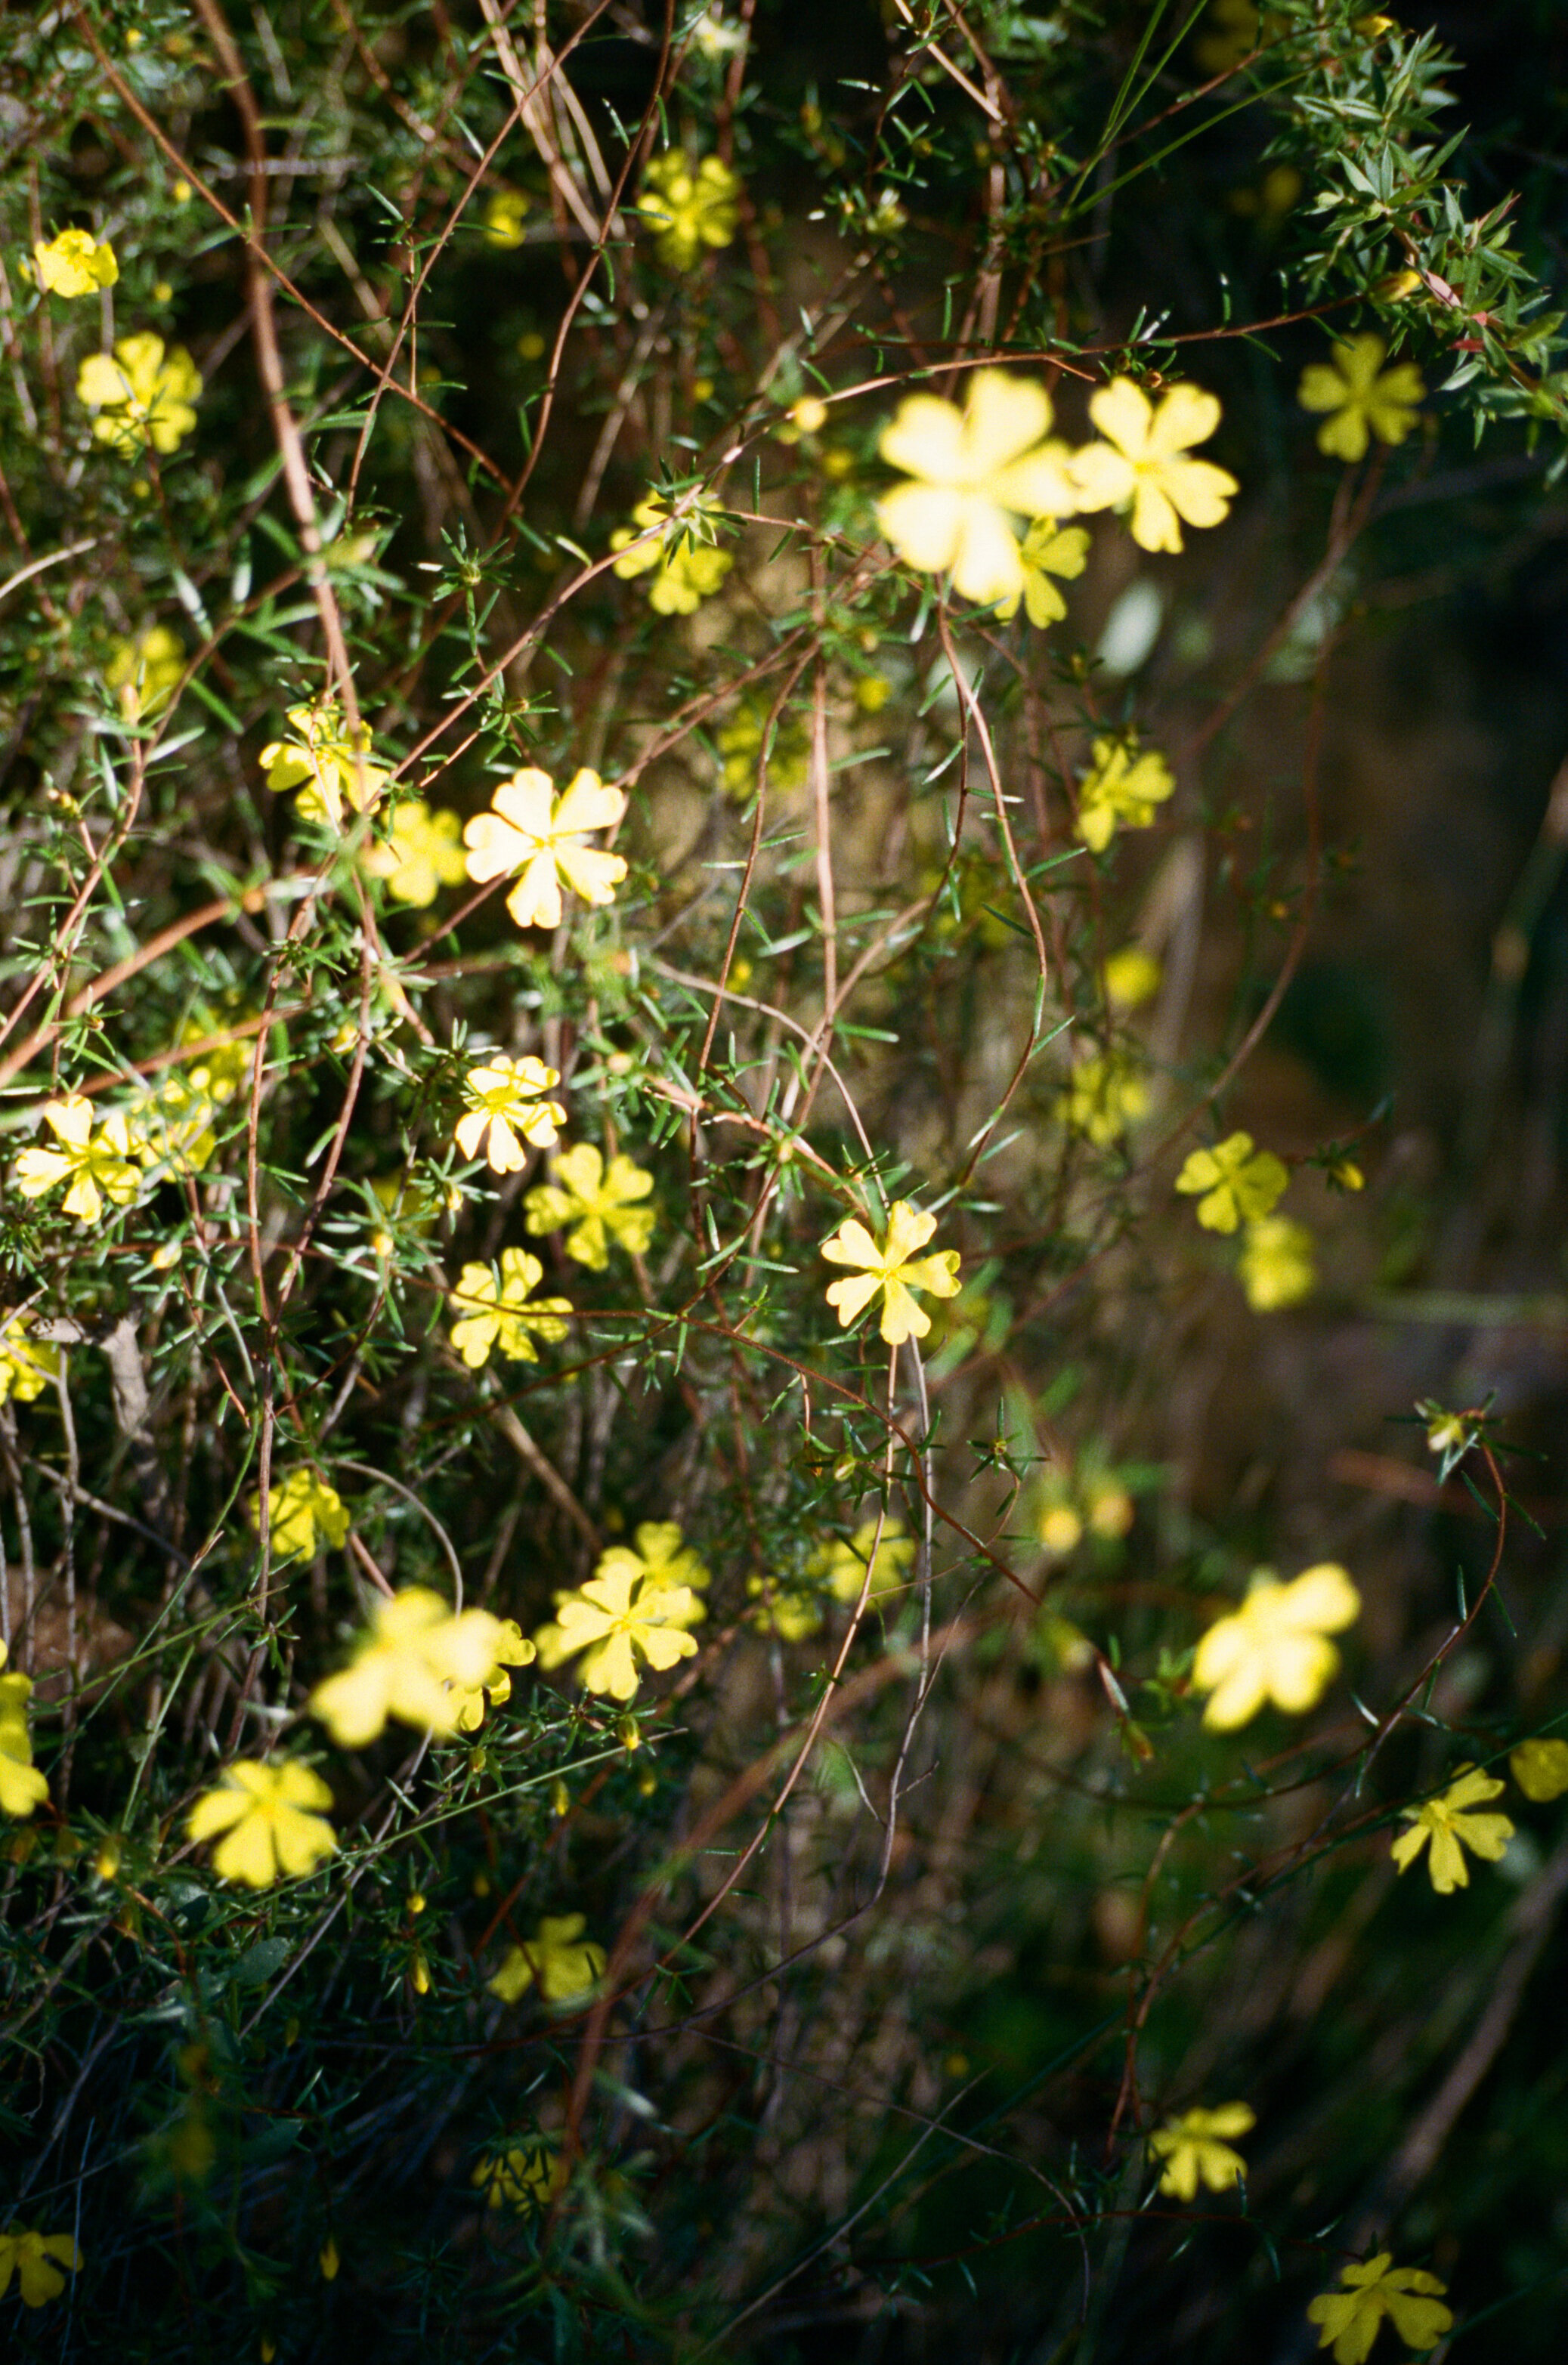 gen-kay-photography-wildflowers-02.jpg